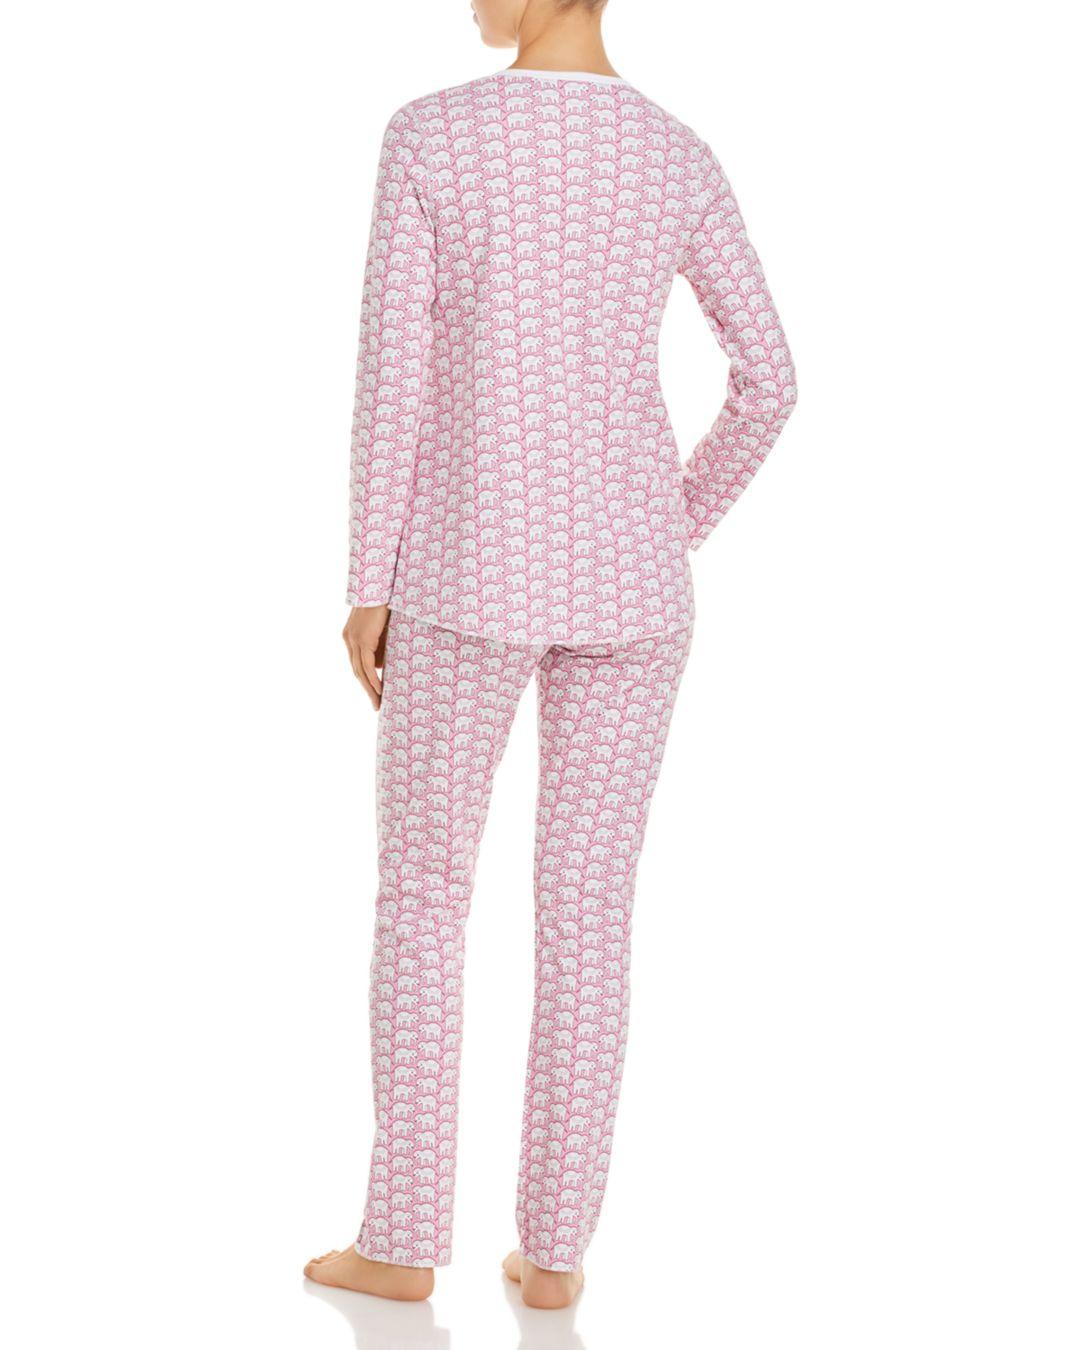 Roberta Roller Rabbit Cotton Elephants Print Pajamas Set in Pink - Lyst